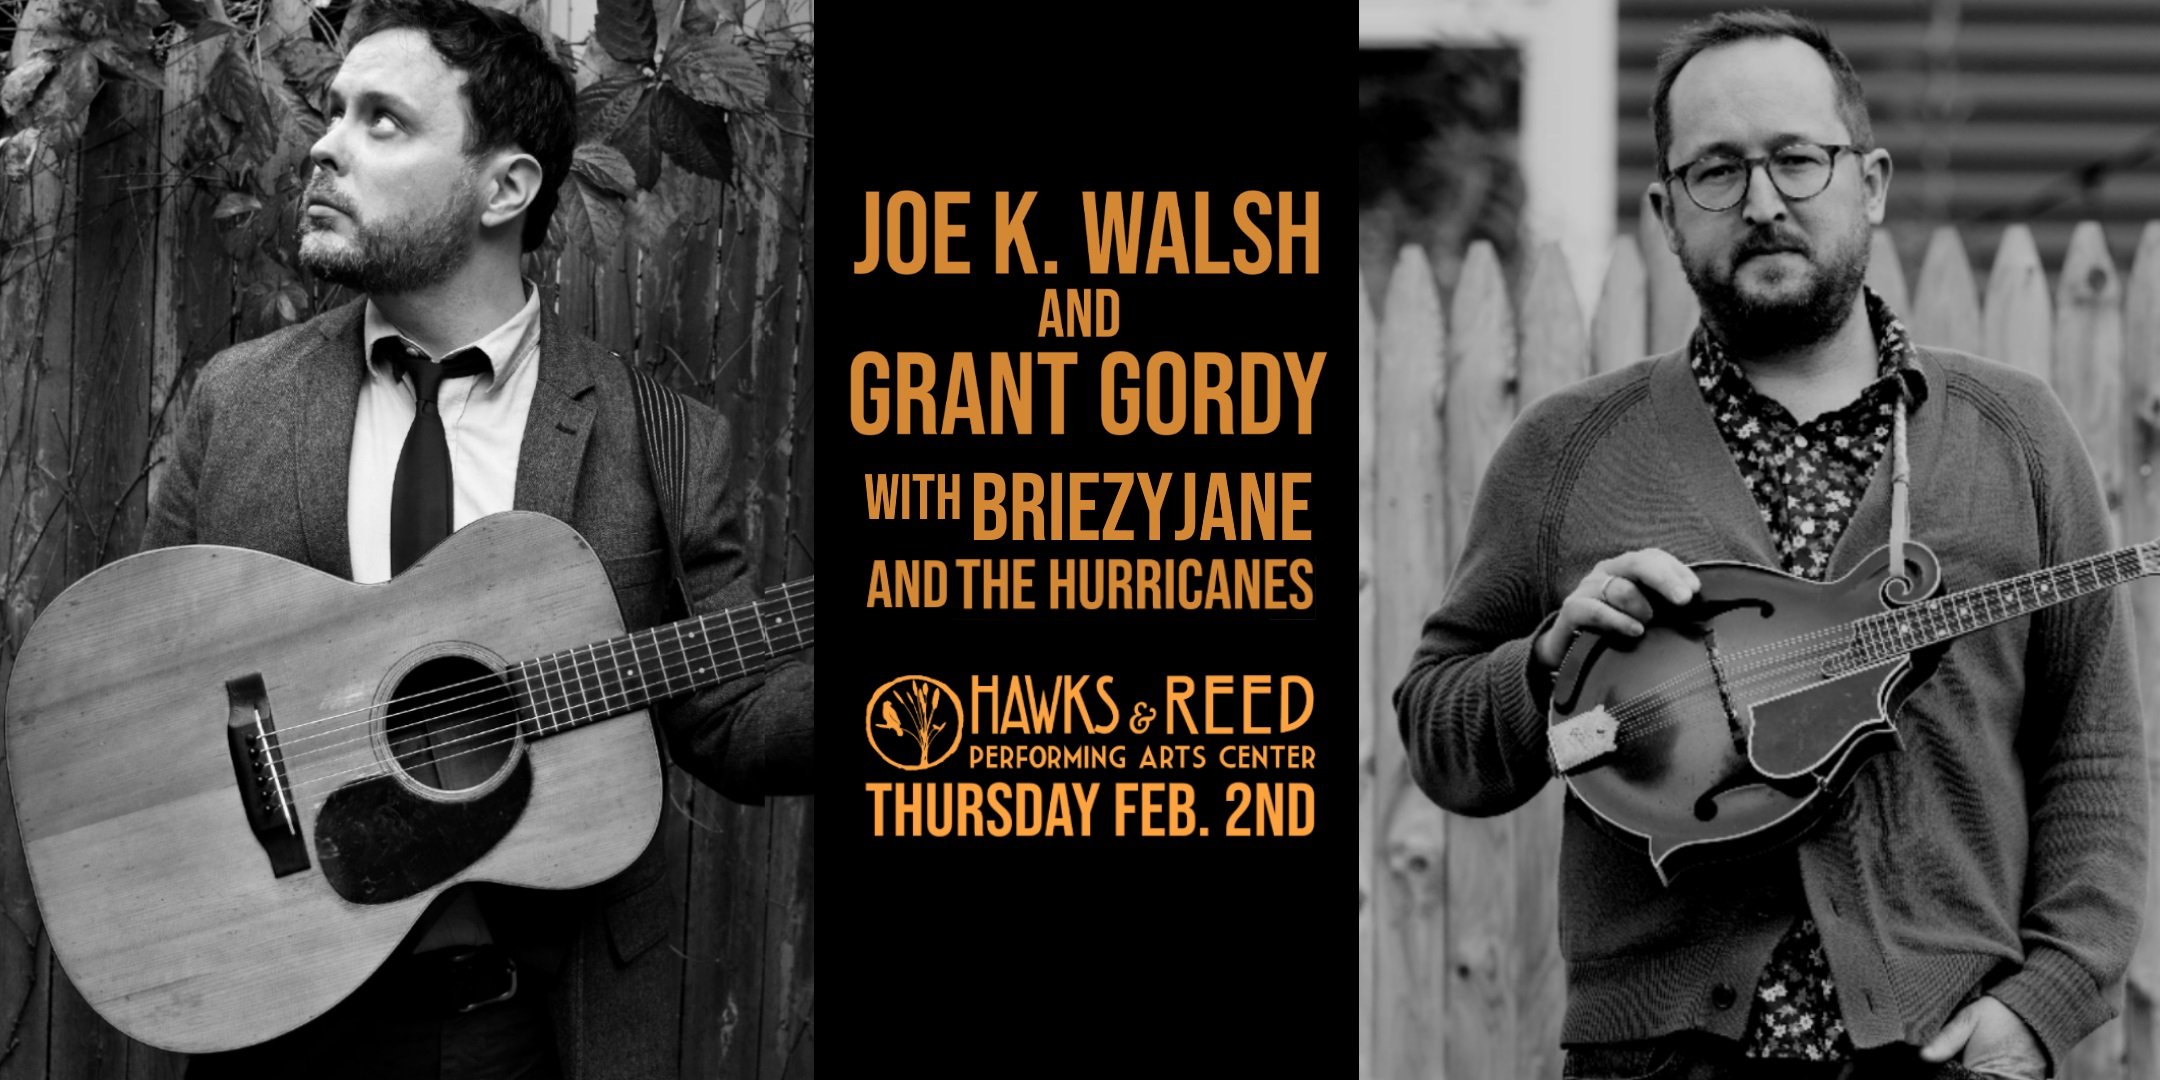 Joe K. Walsh & Grant Gordy with Briezyjane & the Hurricanes at Hawks & Reed